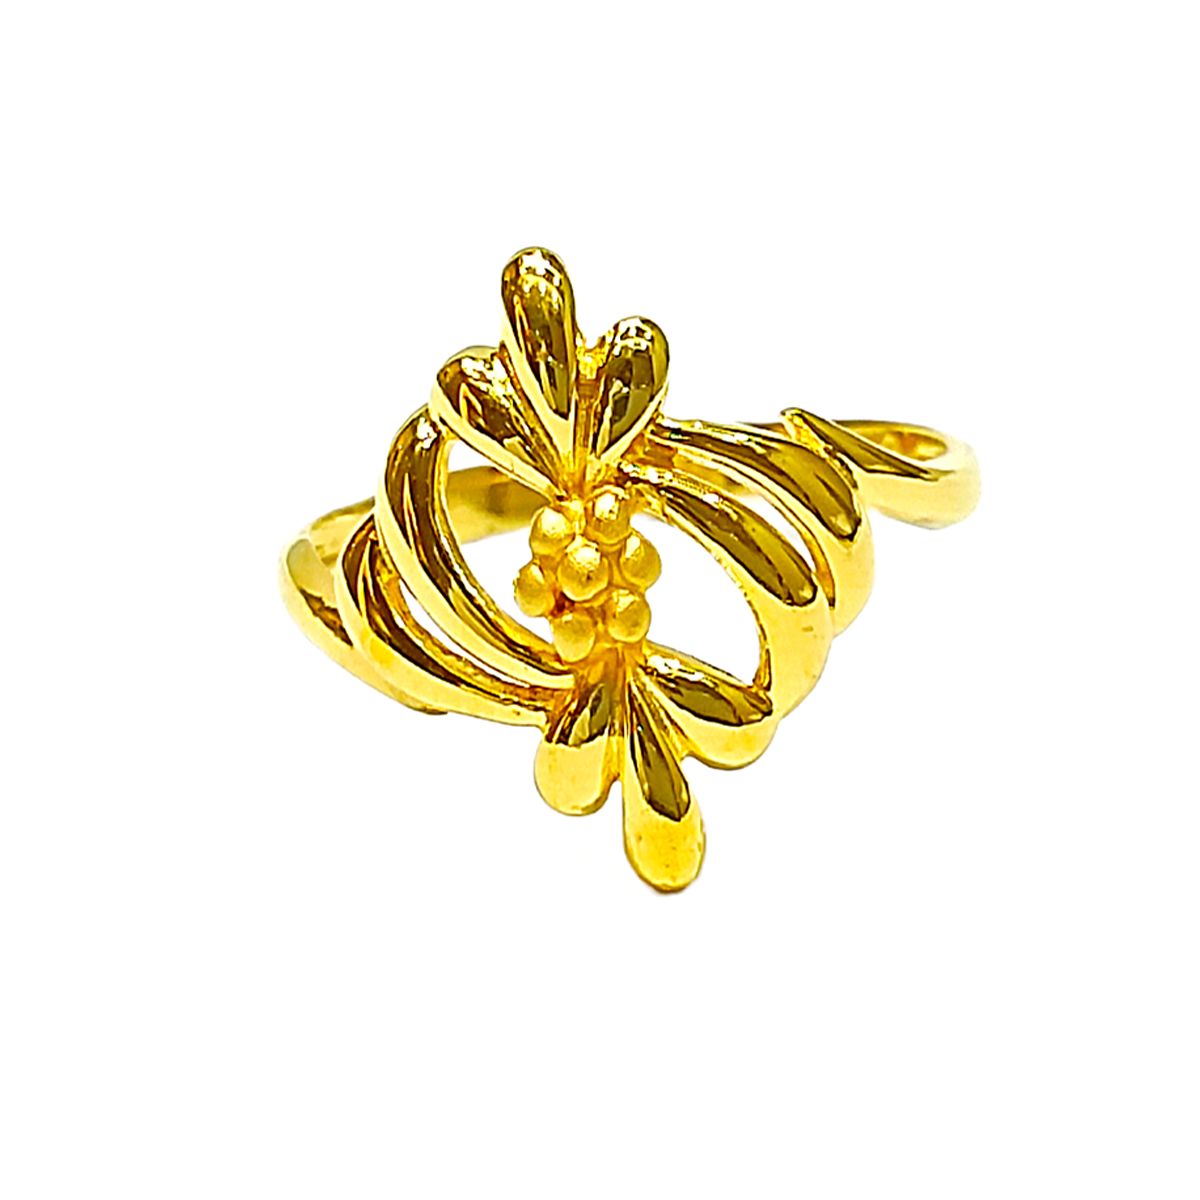 Sita Devi gold ring